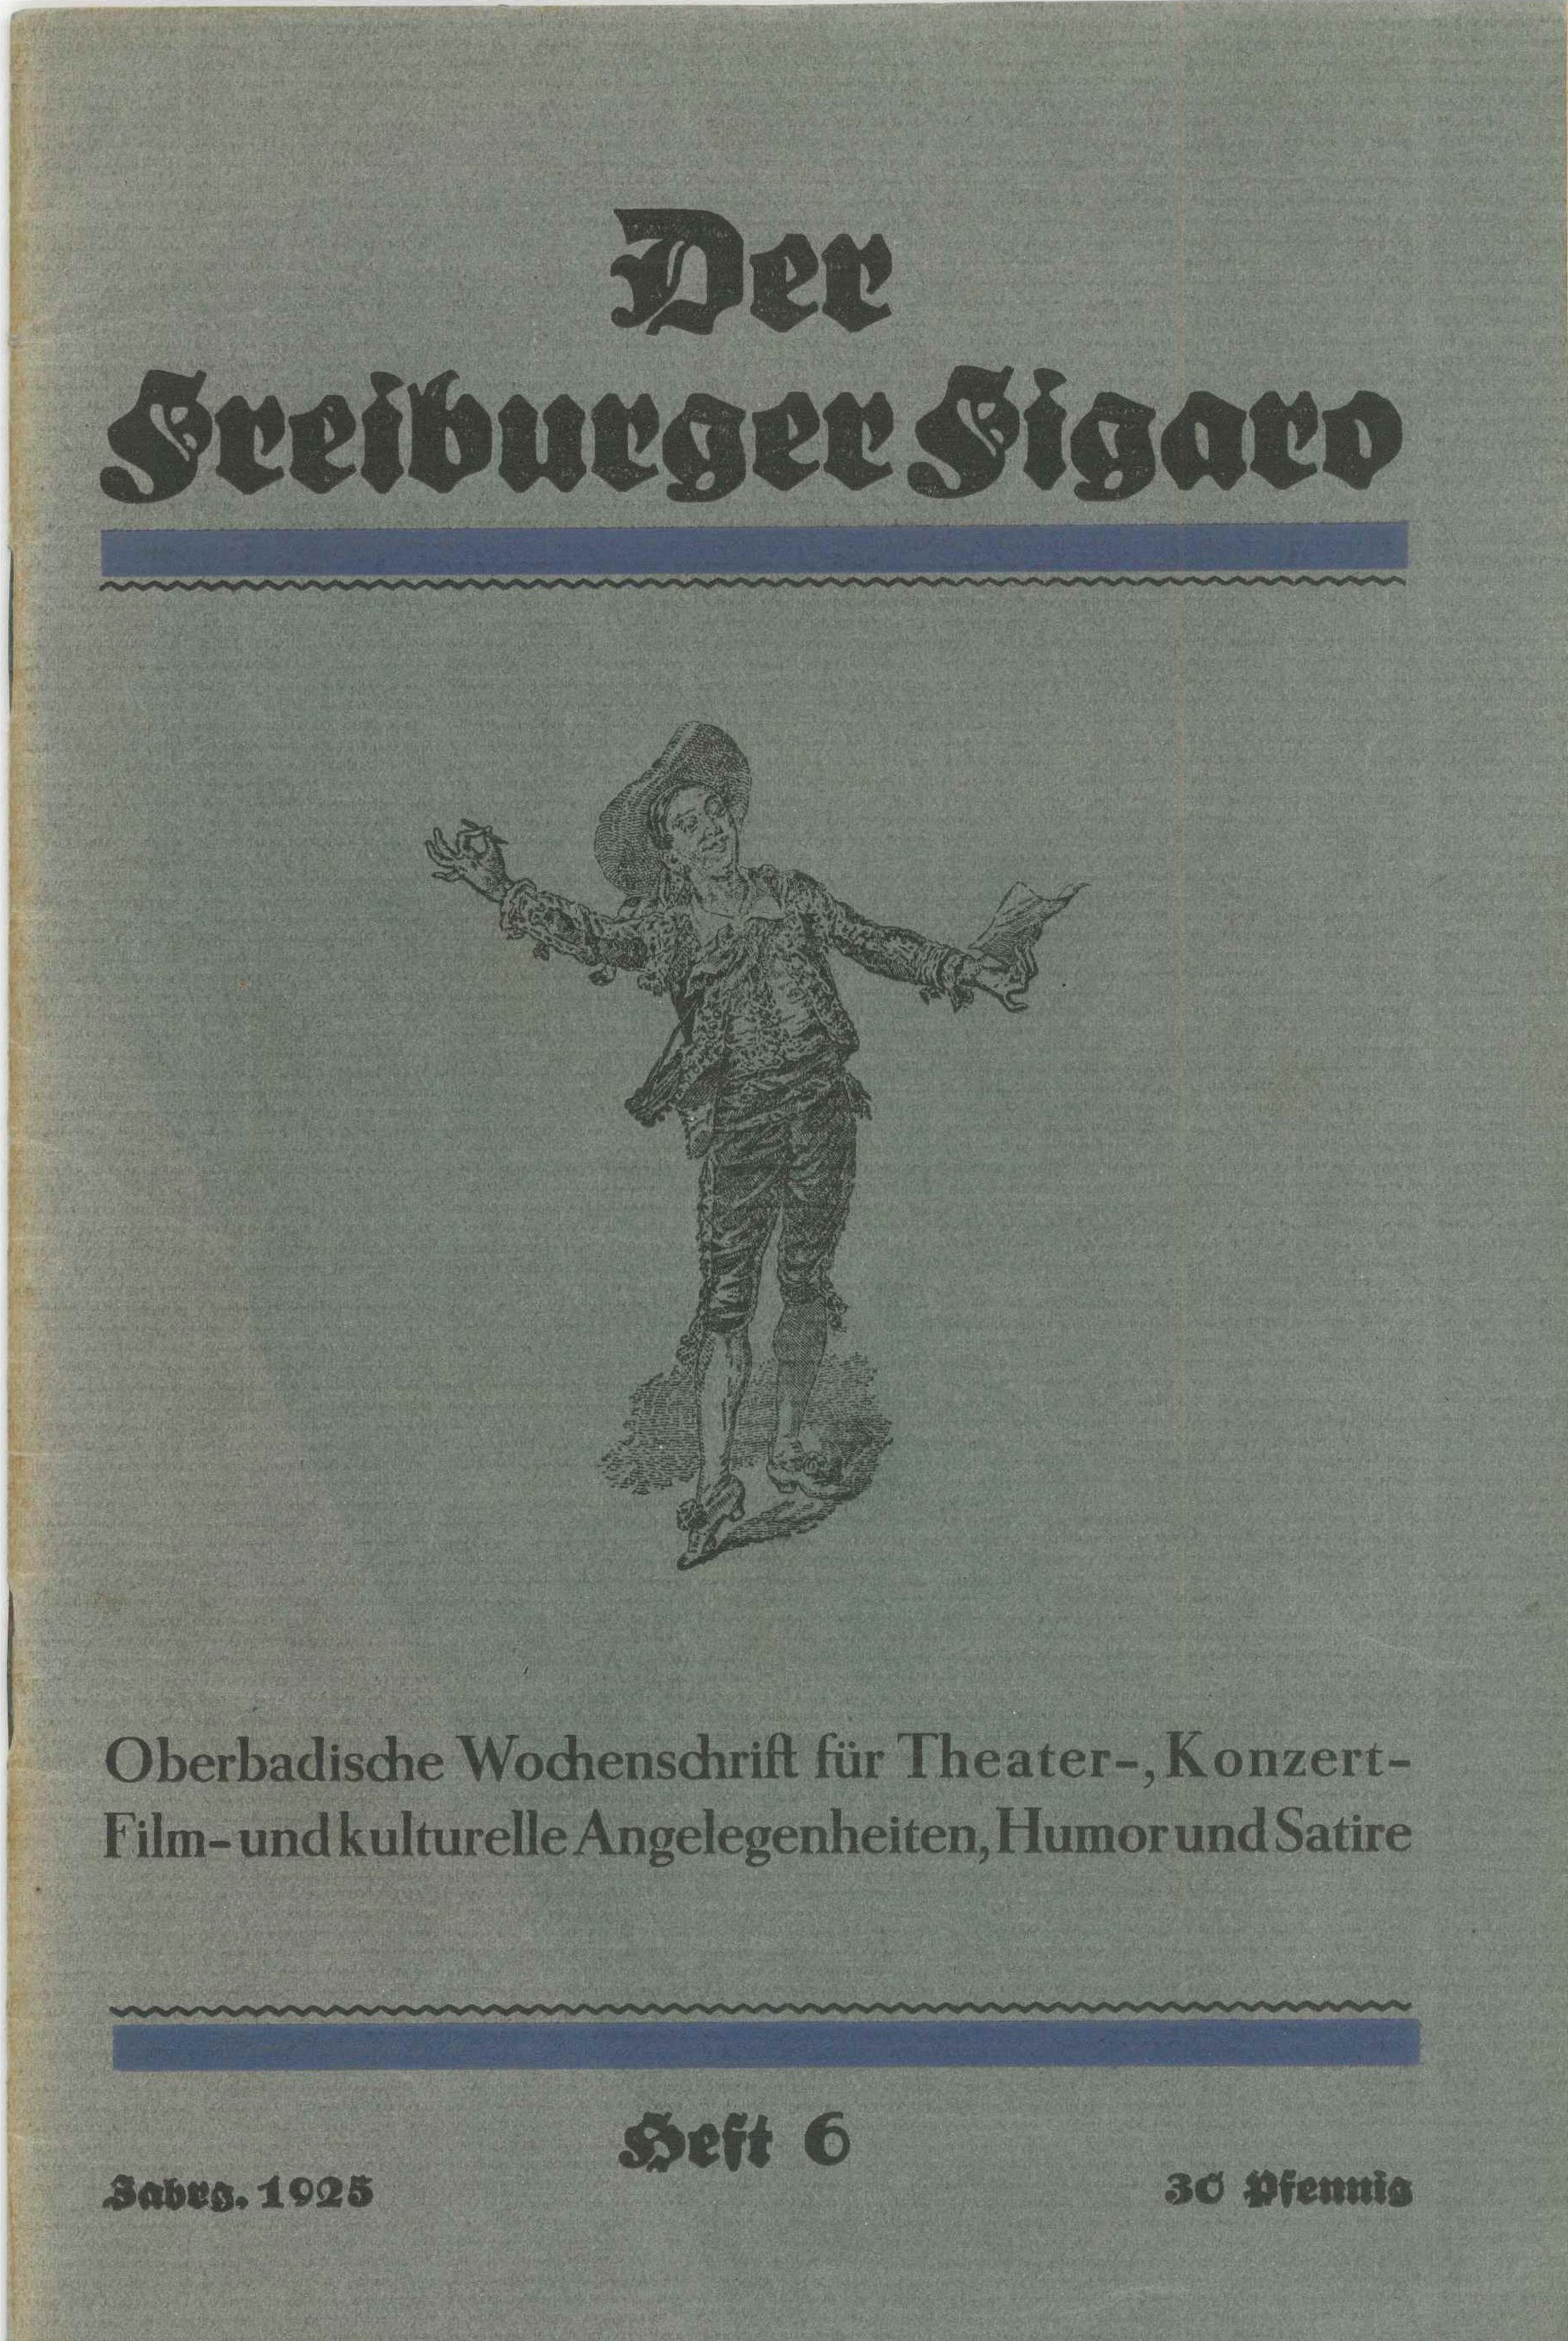 Der Freiburger Figaro (Kurt Tucholsky Literaturmuseum CC BY-NC-SA)